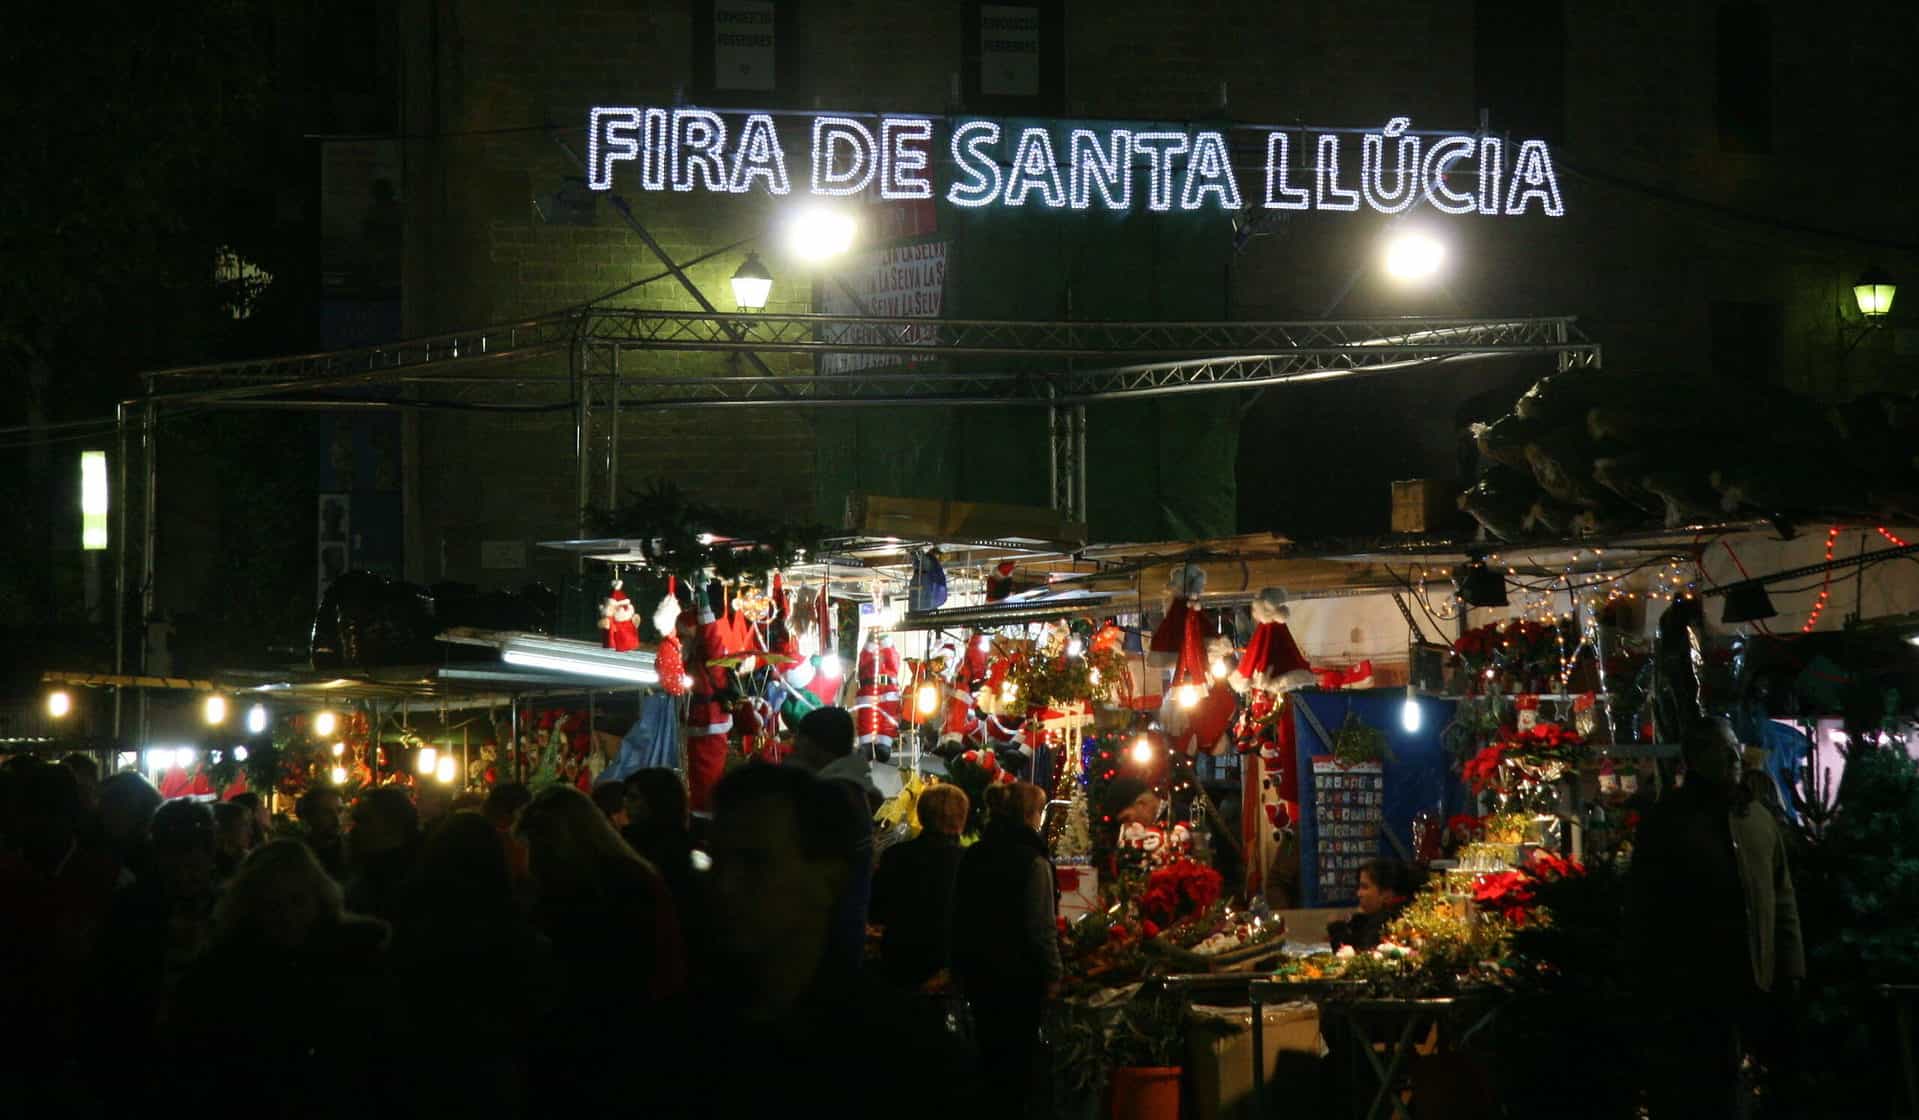 Christmas market in Barcelona - La Fira de Santa Llúcia 